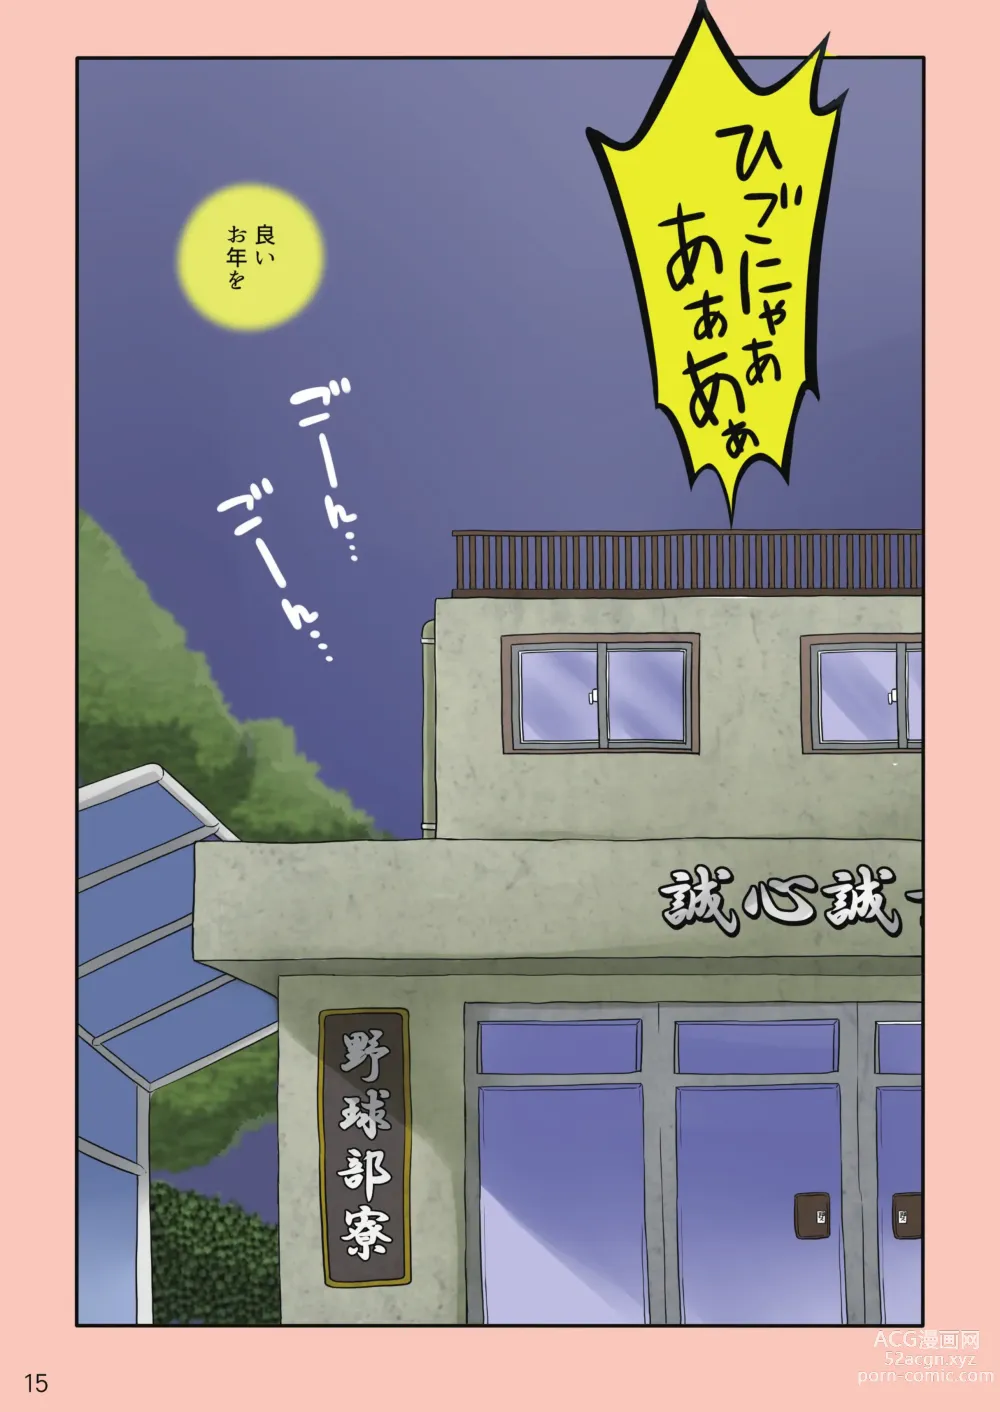 Page 16 of doujinshi Kyuji vs Kyuji